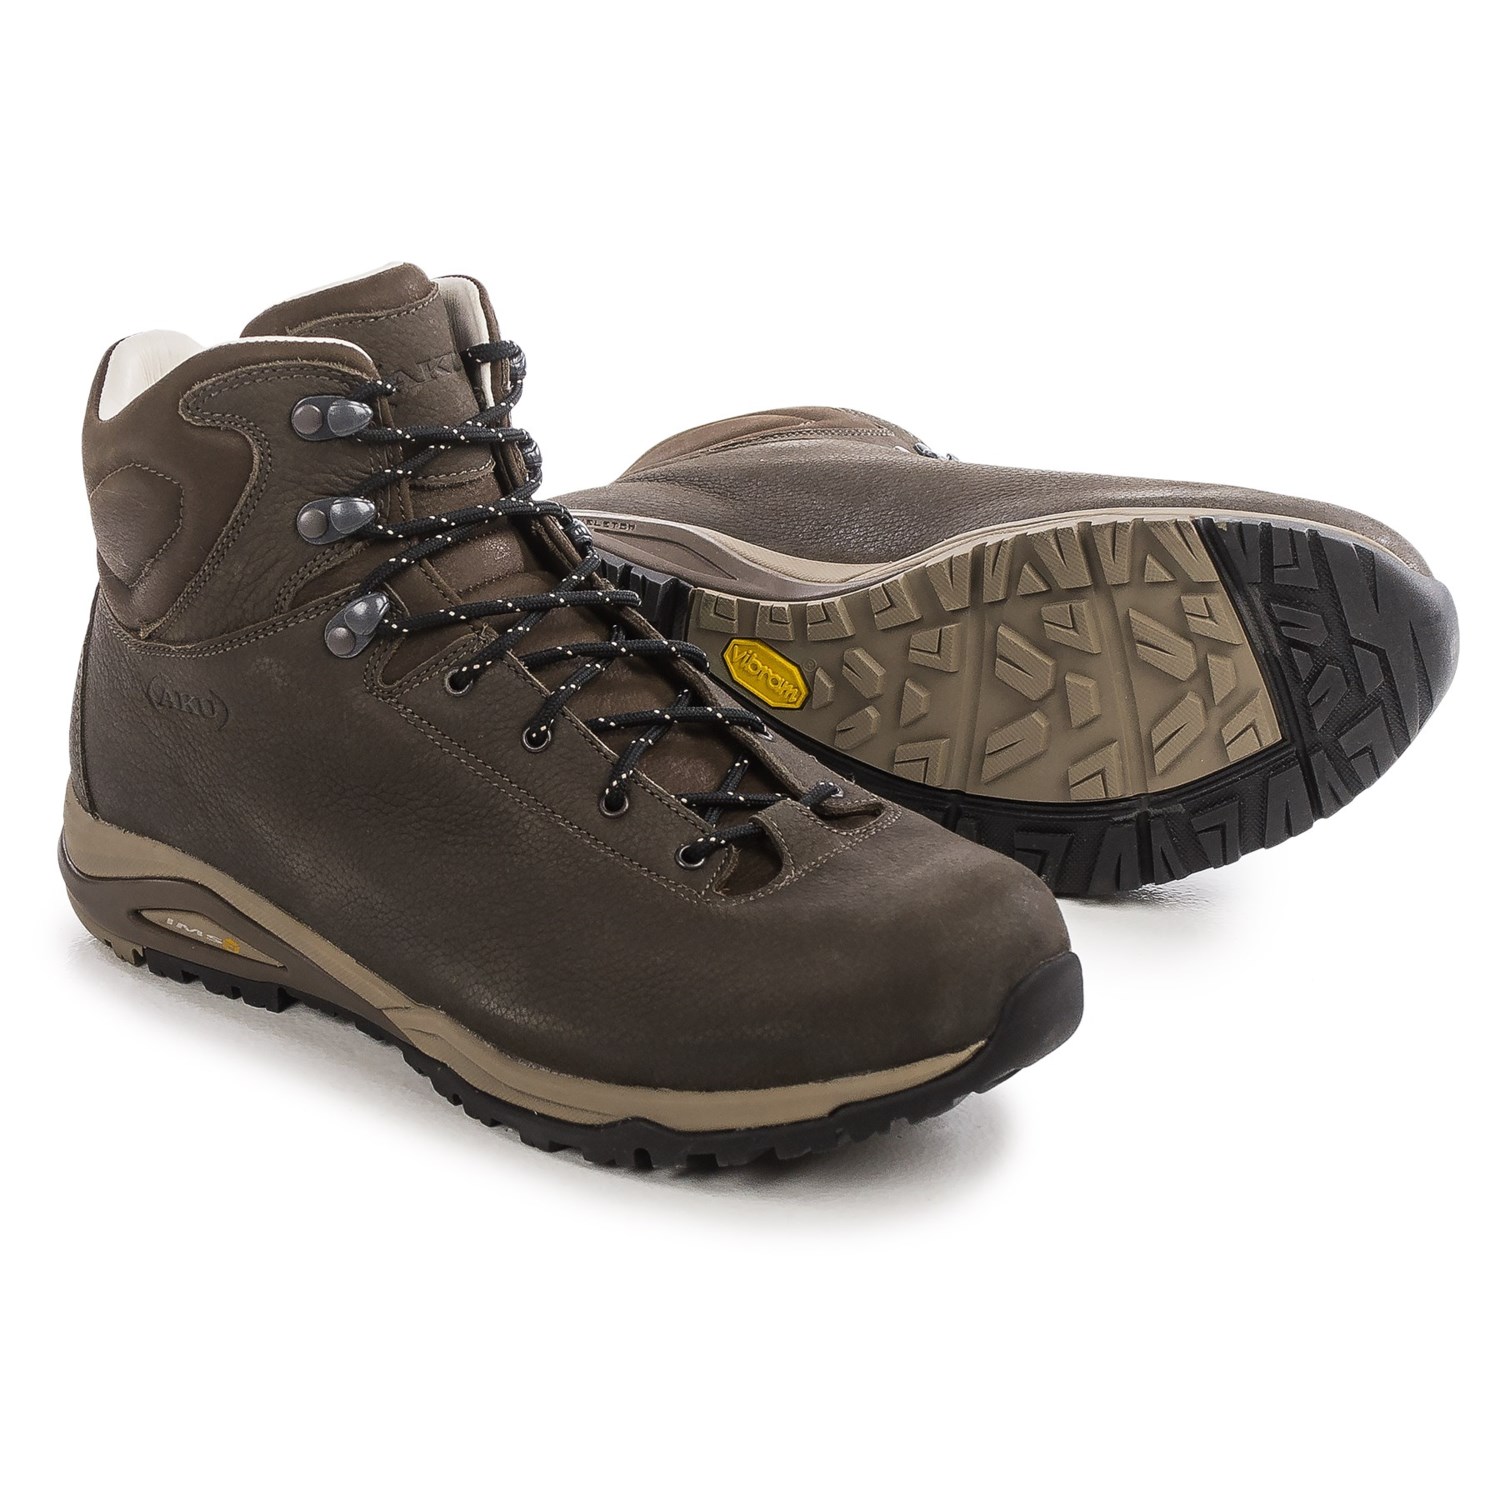 AKU Alpina Plus LTR Hiking Boots (For Men) - Save 54%